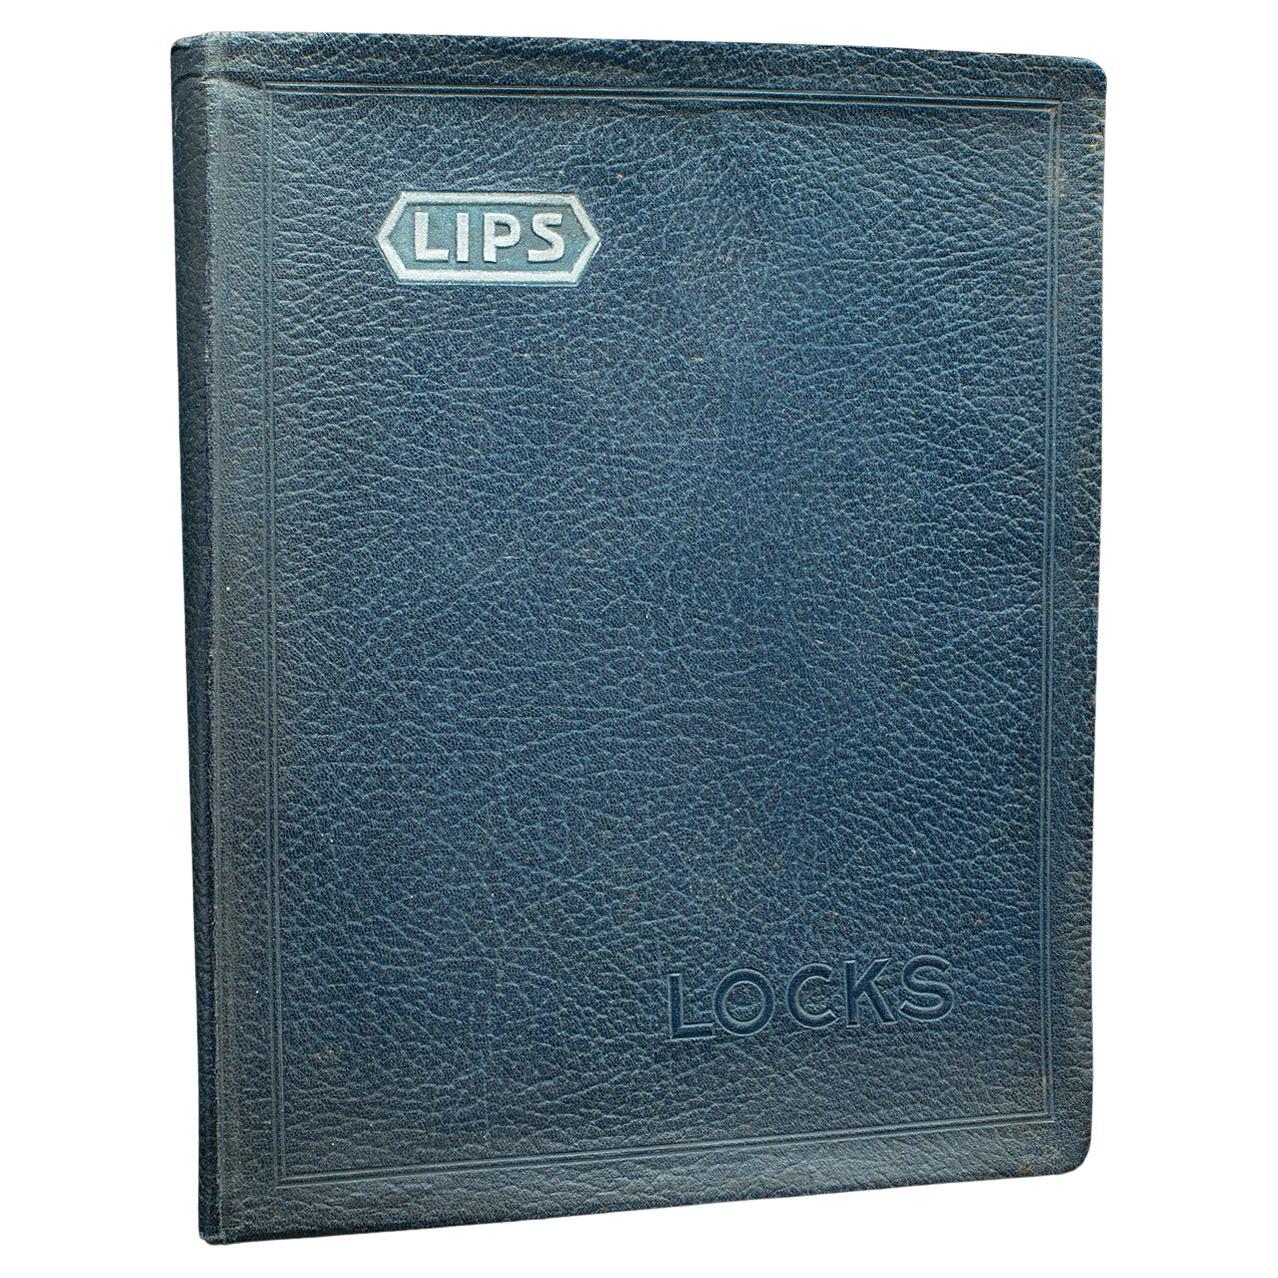 Catalogue professionnel Lips Locks anglais, Folio, Nicholls and Clarke, C.1935